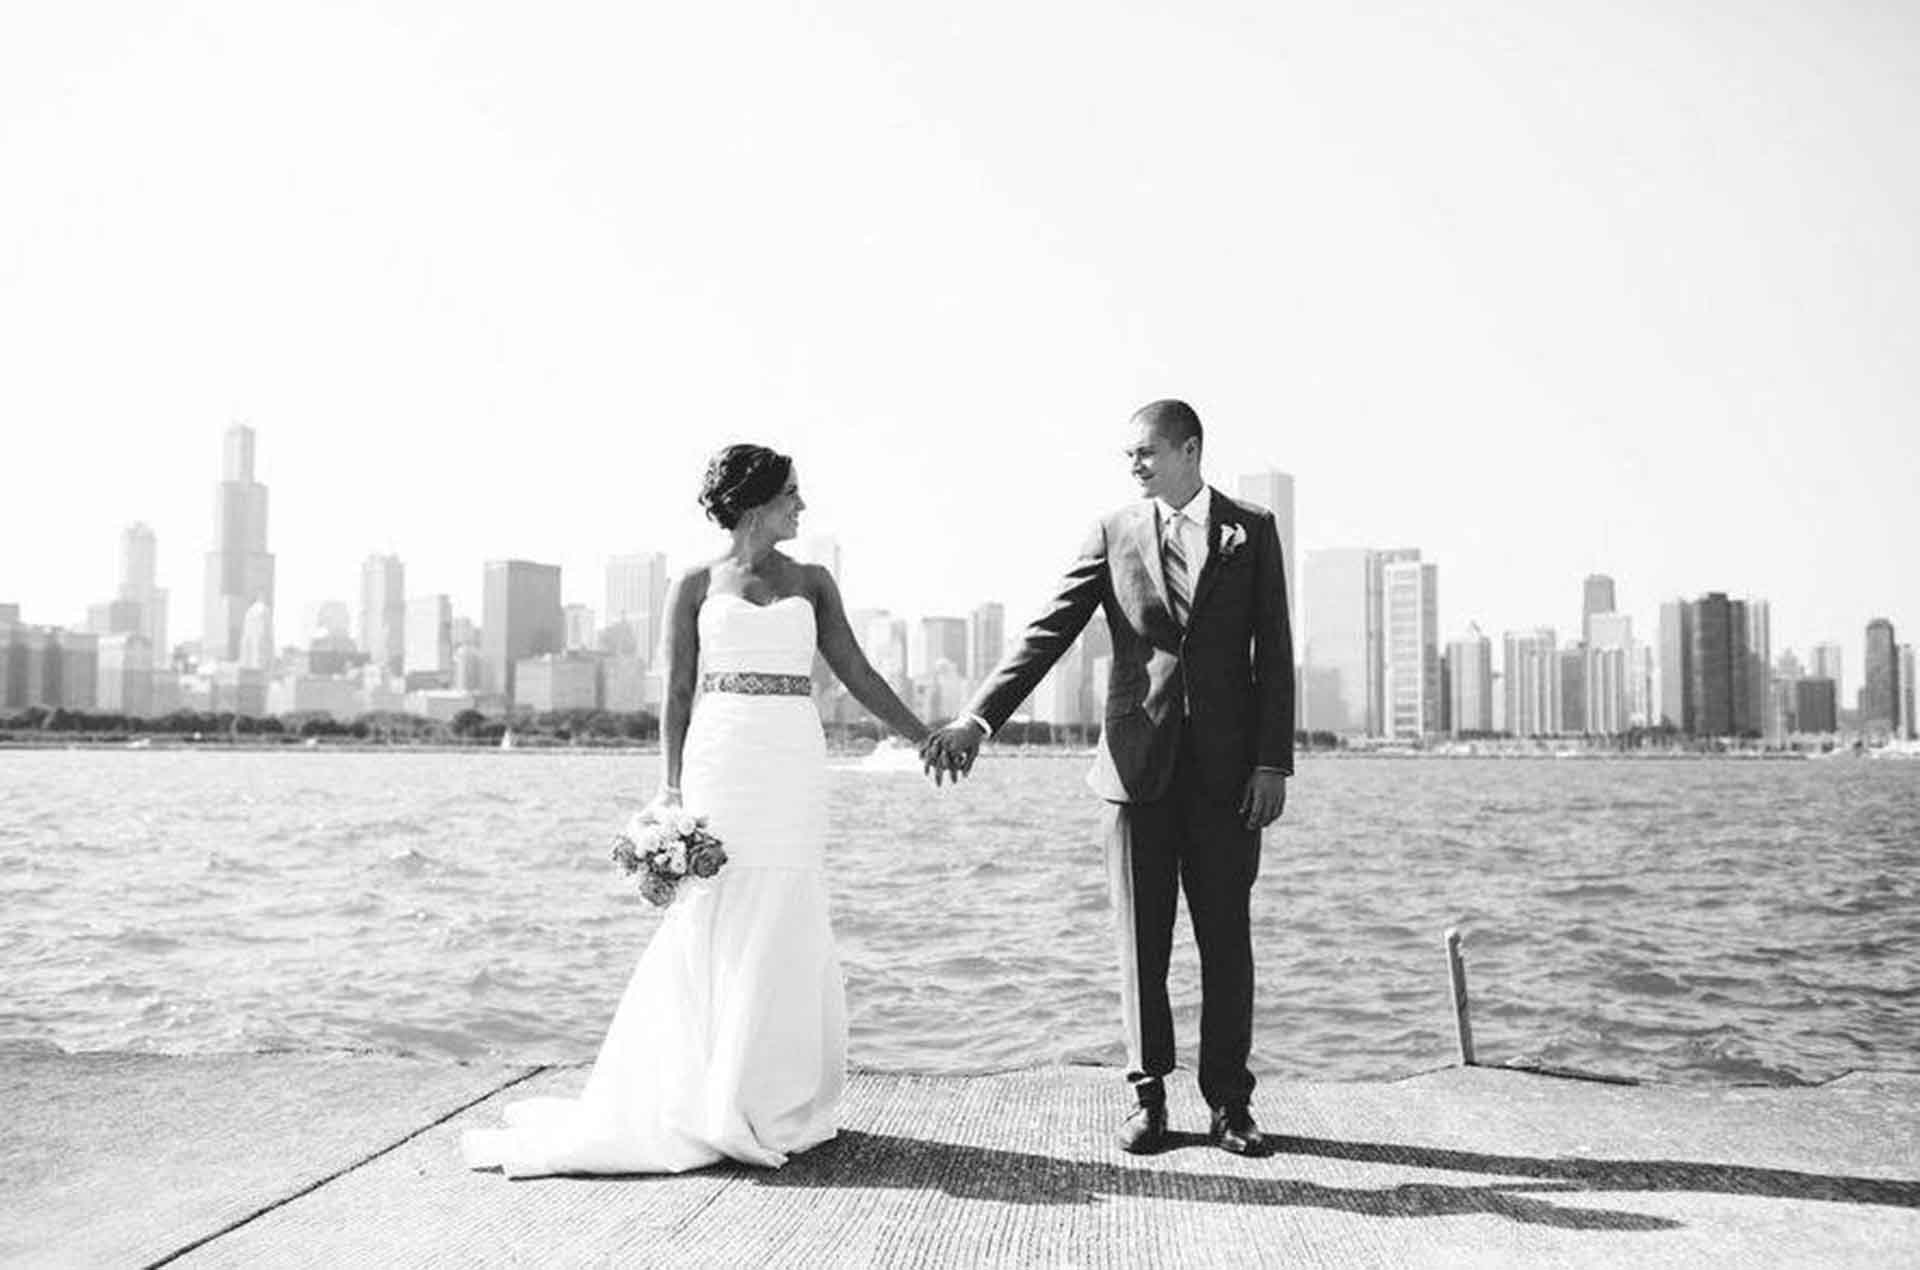 alumni-Halicki-Spirakes-married-couple-chicago-skyline-background